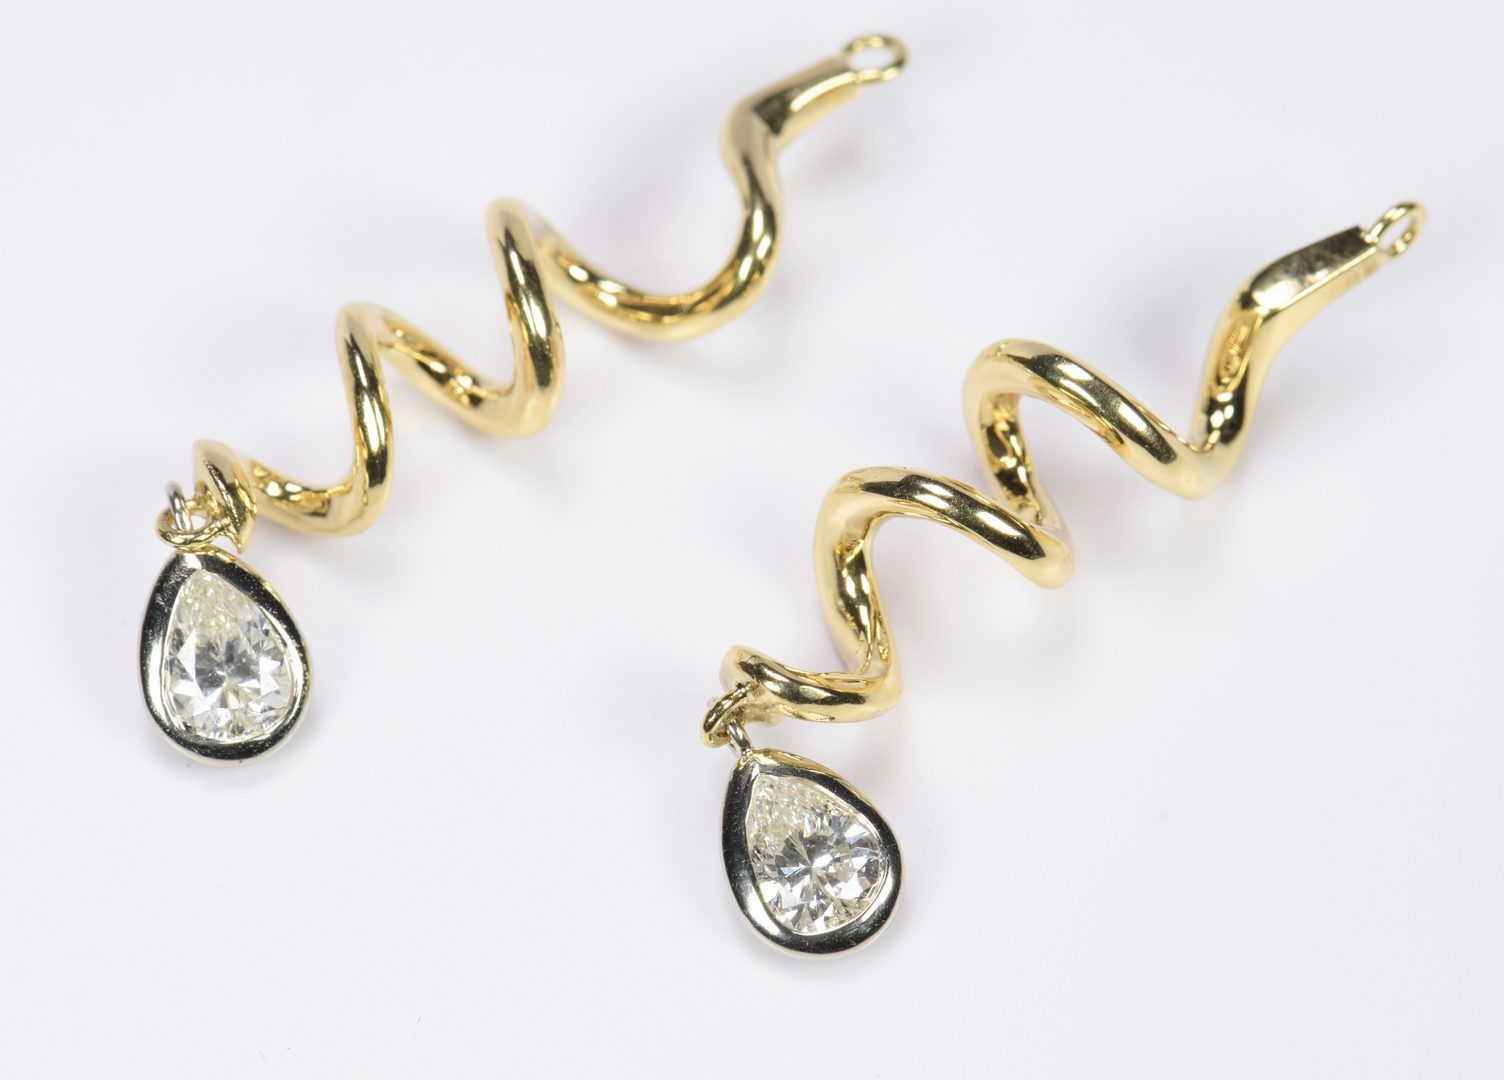 Lot 794: Pear-shaped Diamond Earring Jackets